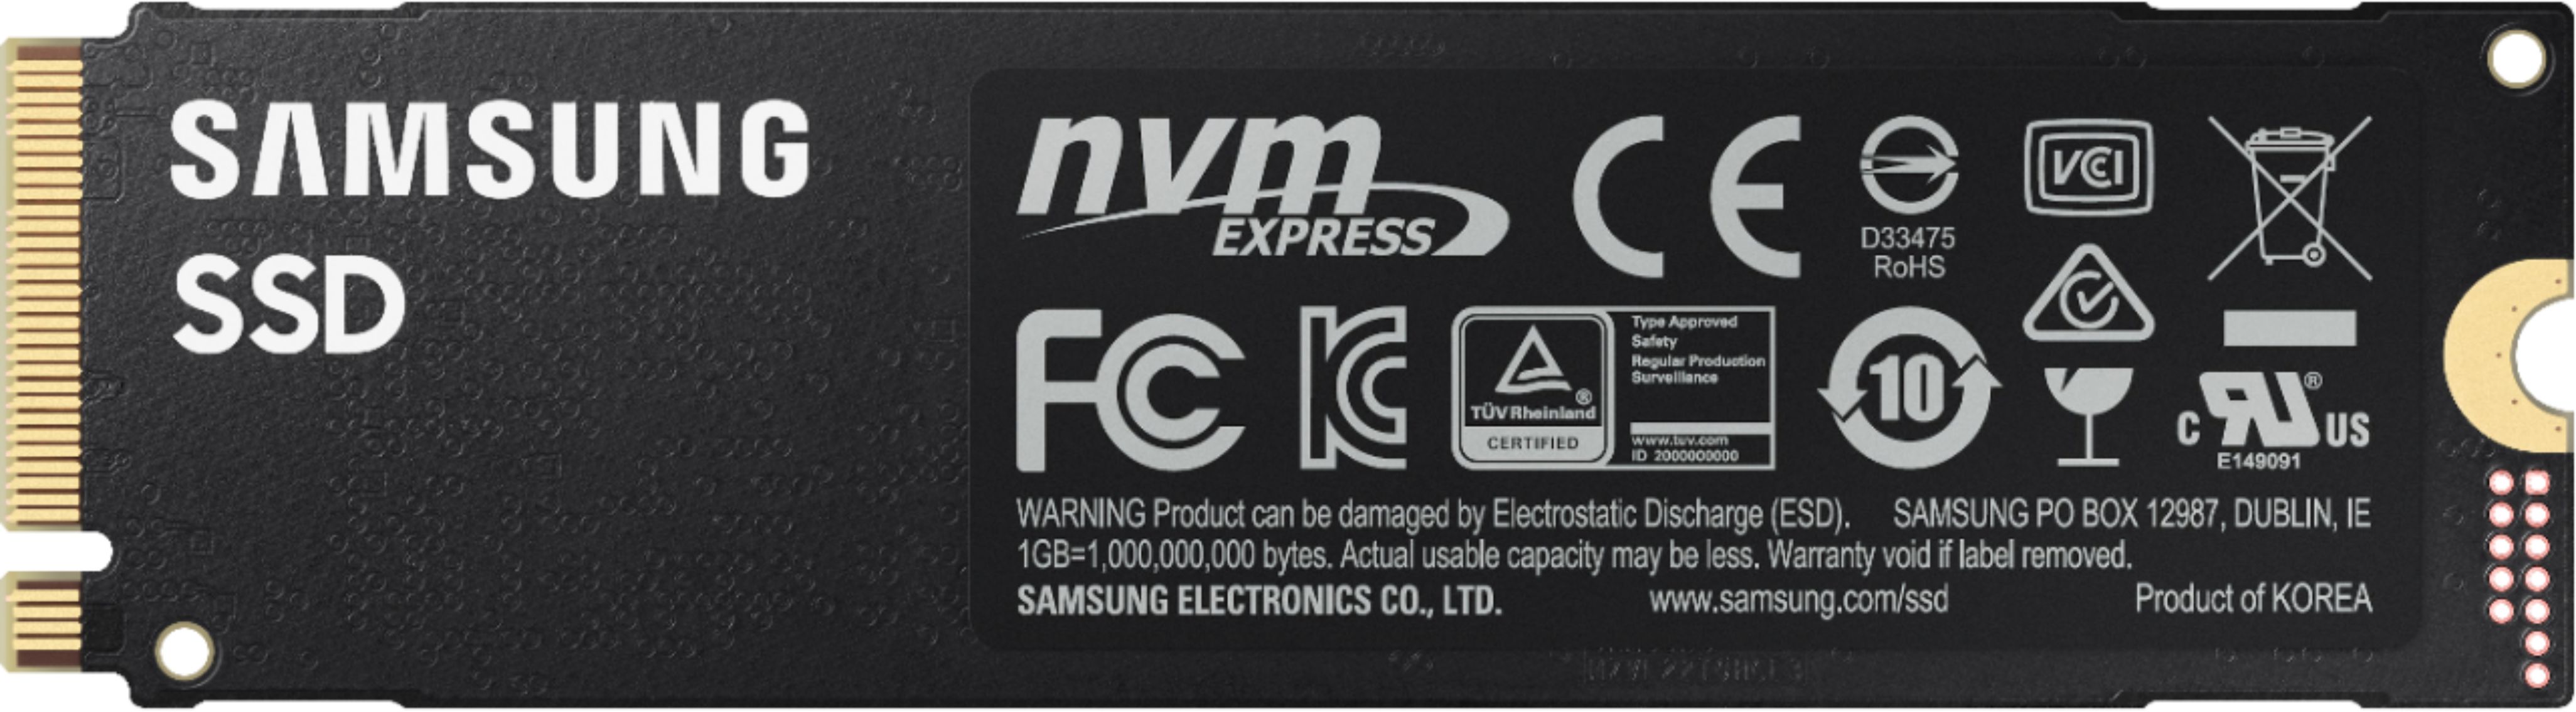 Samsung 980 PRO 500GB Internal Gaming SSD PCIe Gen 4 x4 NVMe MZ-V8P500B/AM - Best